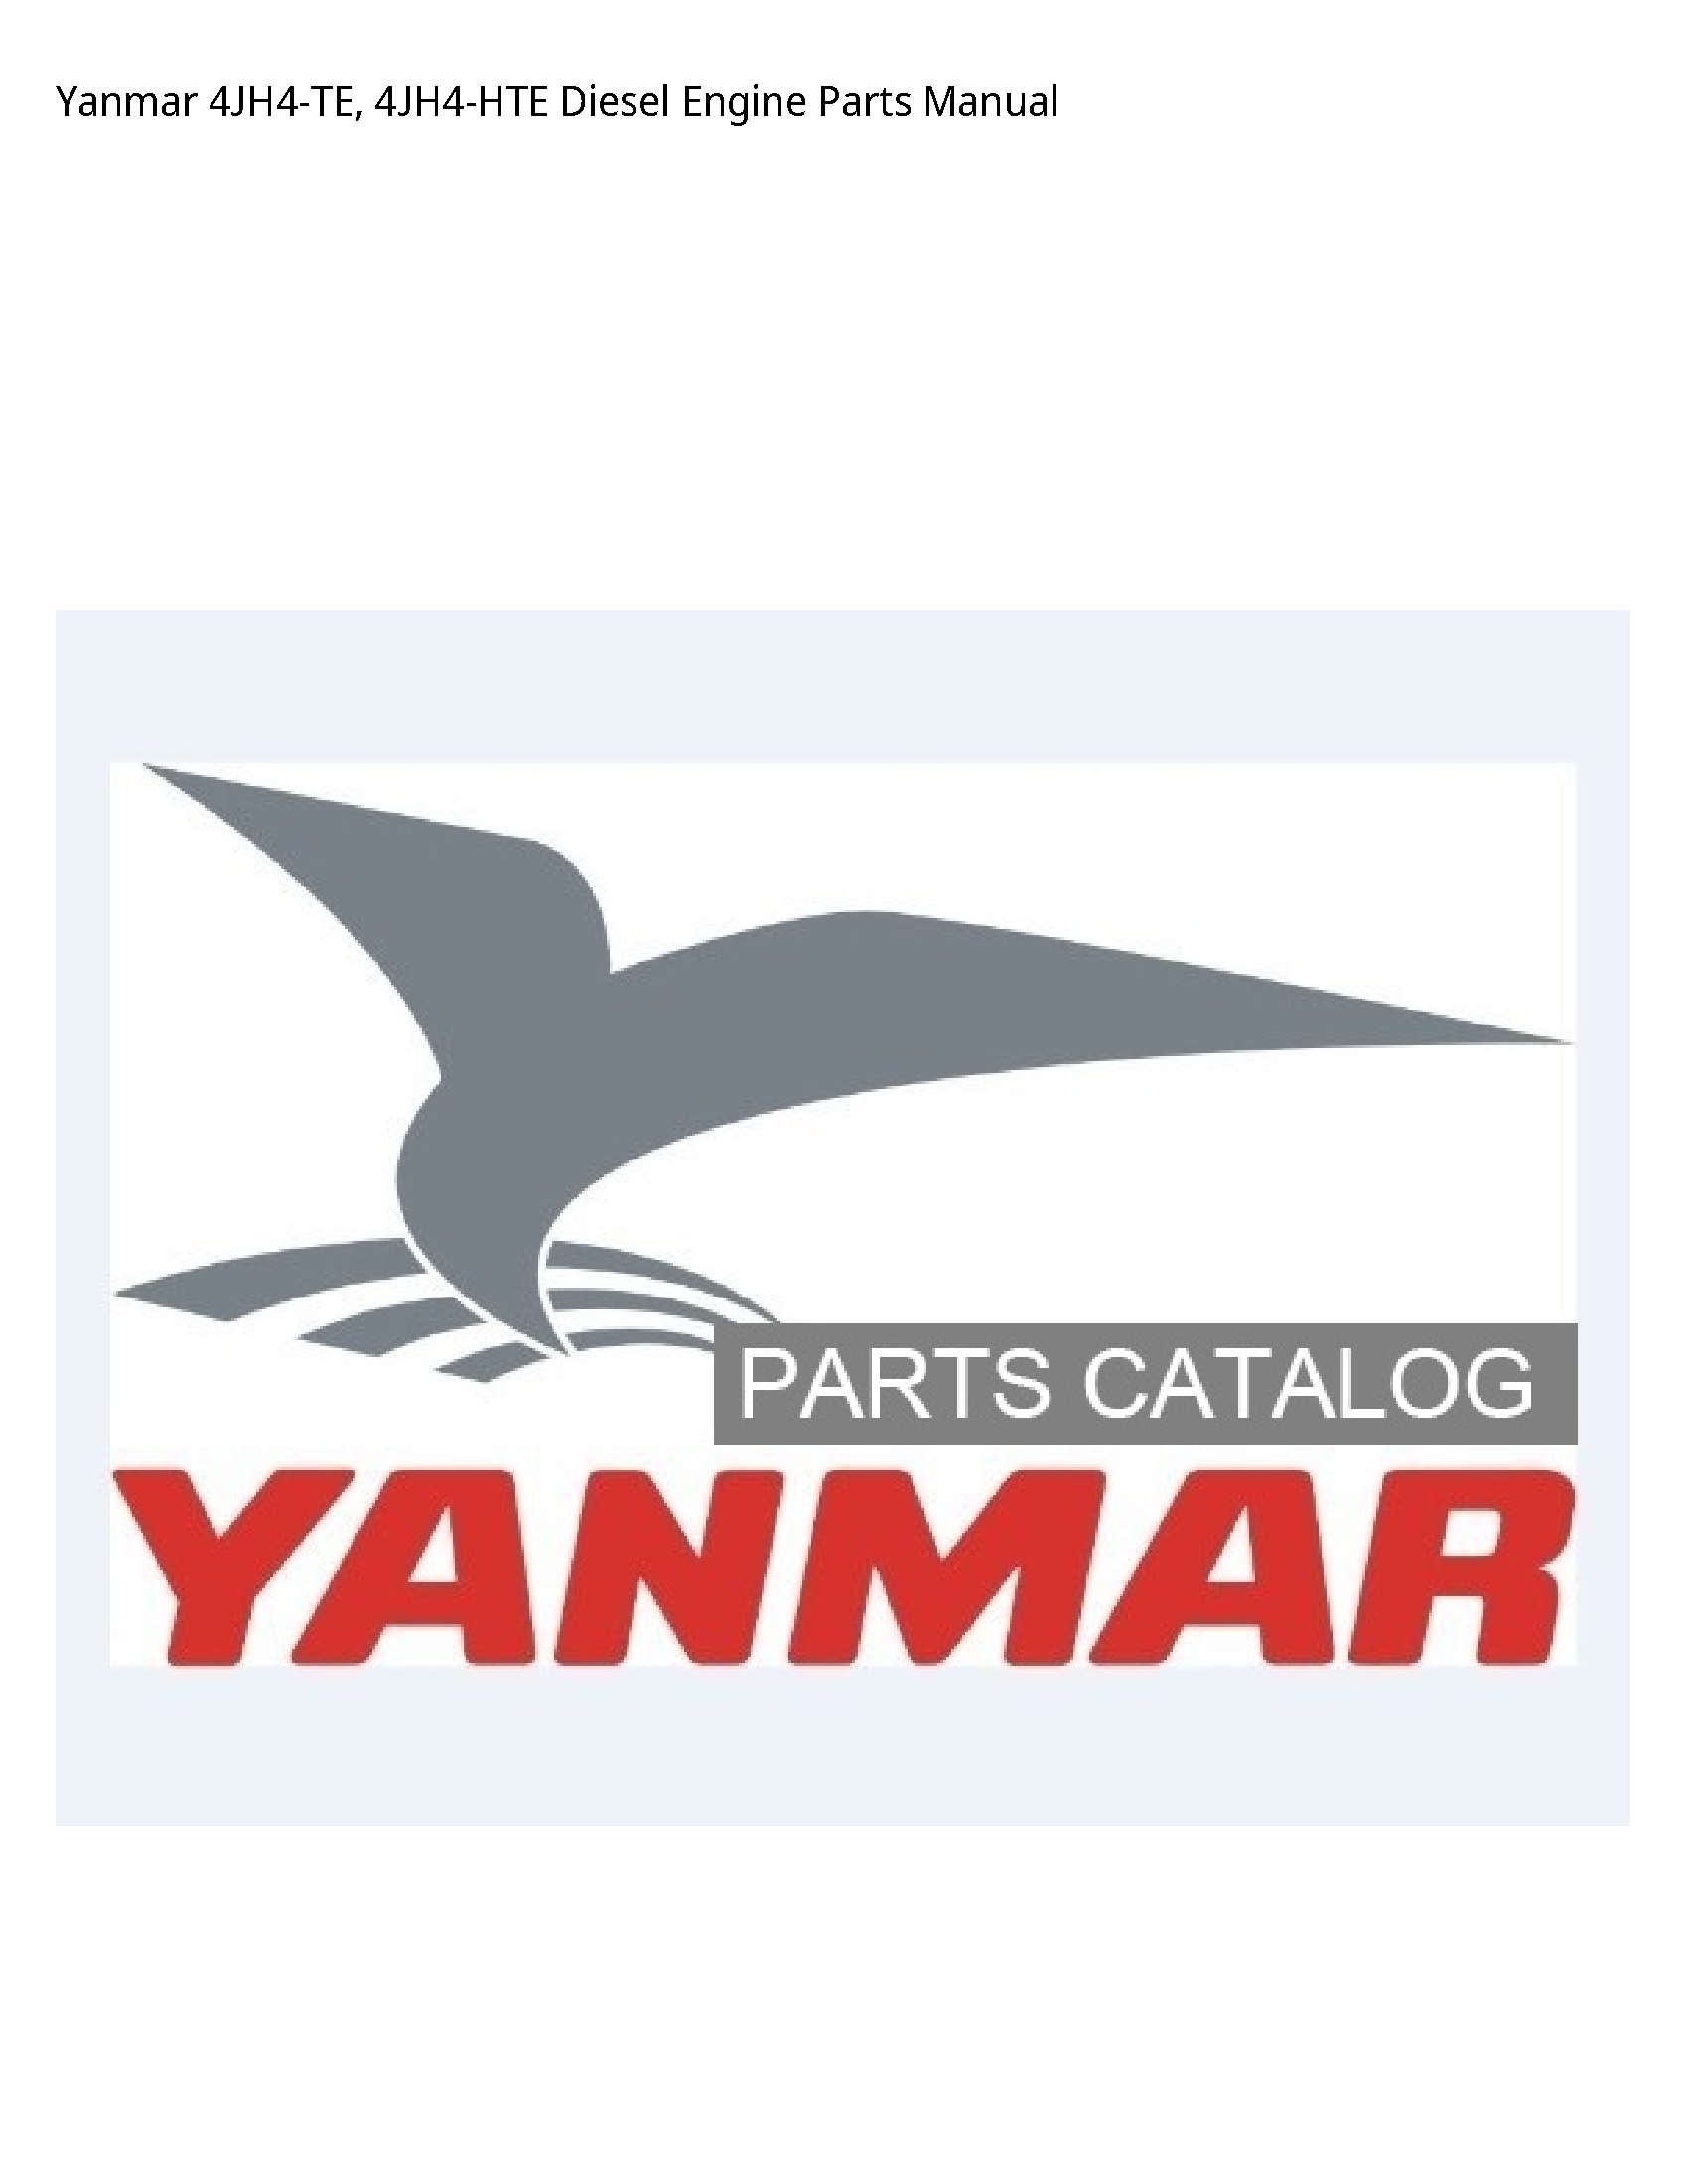 Yanmar 4JH4-TE Diesel Engine Parts manual